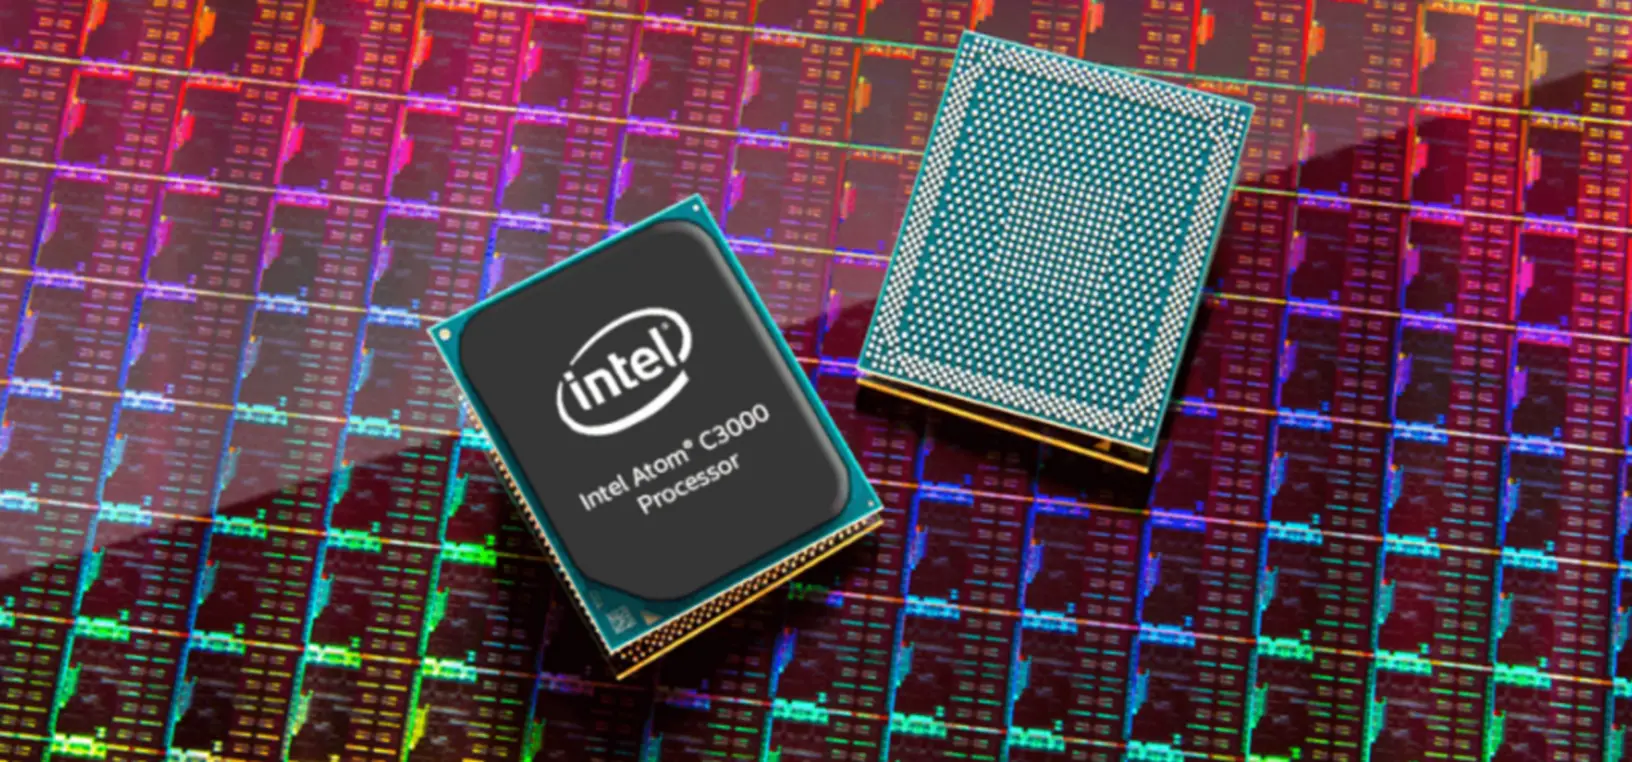 Модели интел. Intel Atom c3000. Процессор Интел атом. Процессор Intel Atom z3736f. Процессор Intel Atom inside.